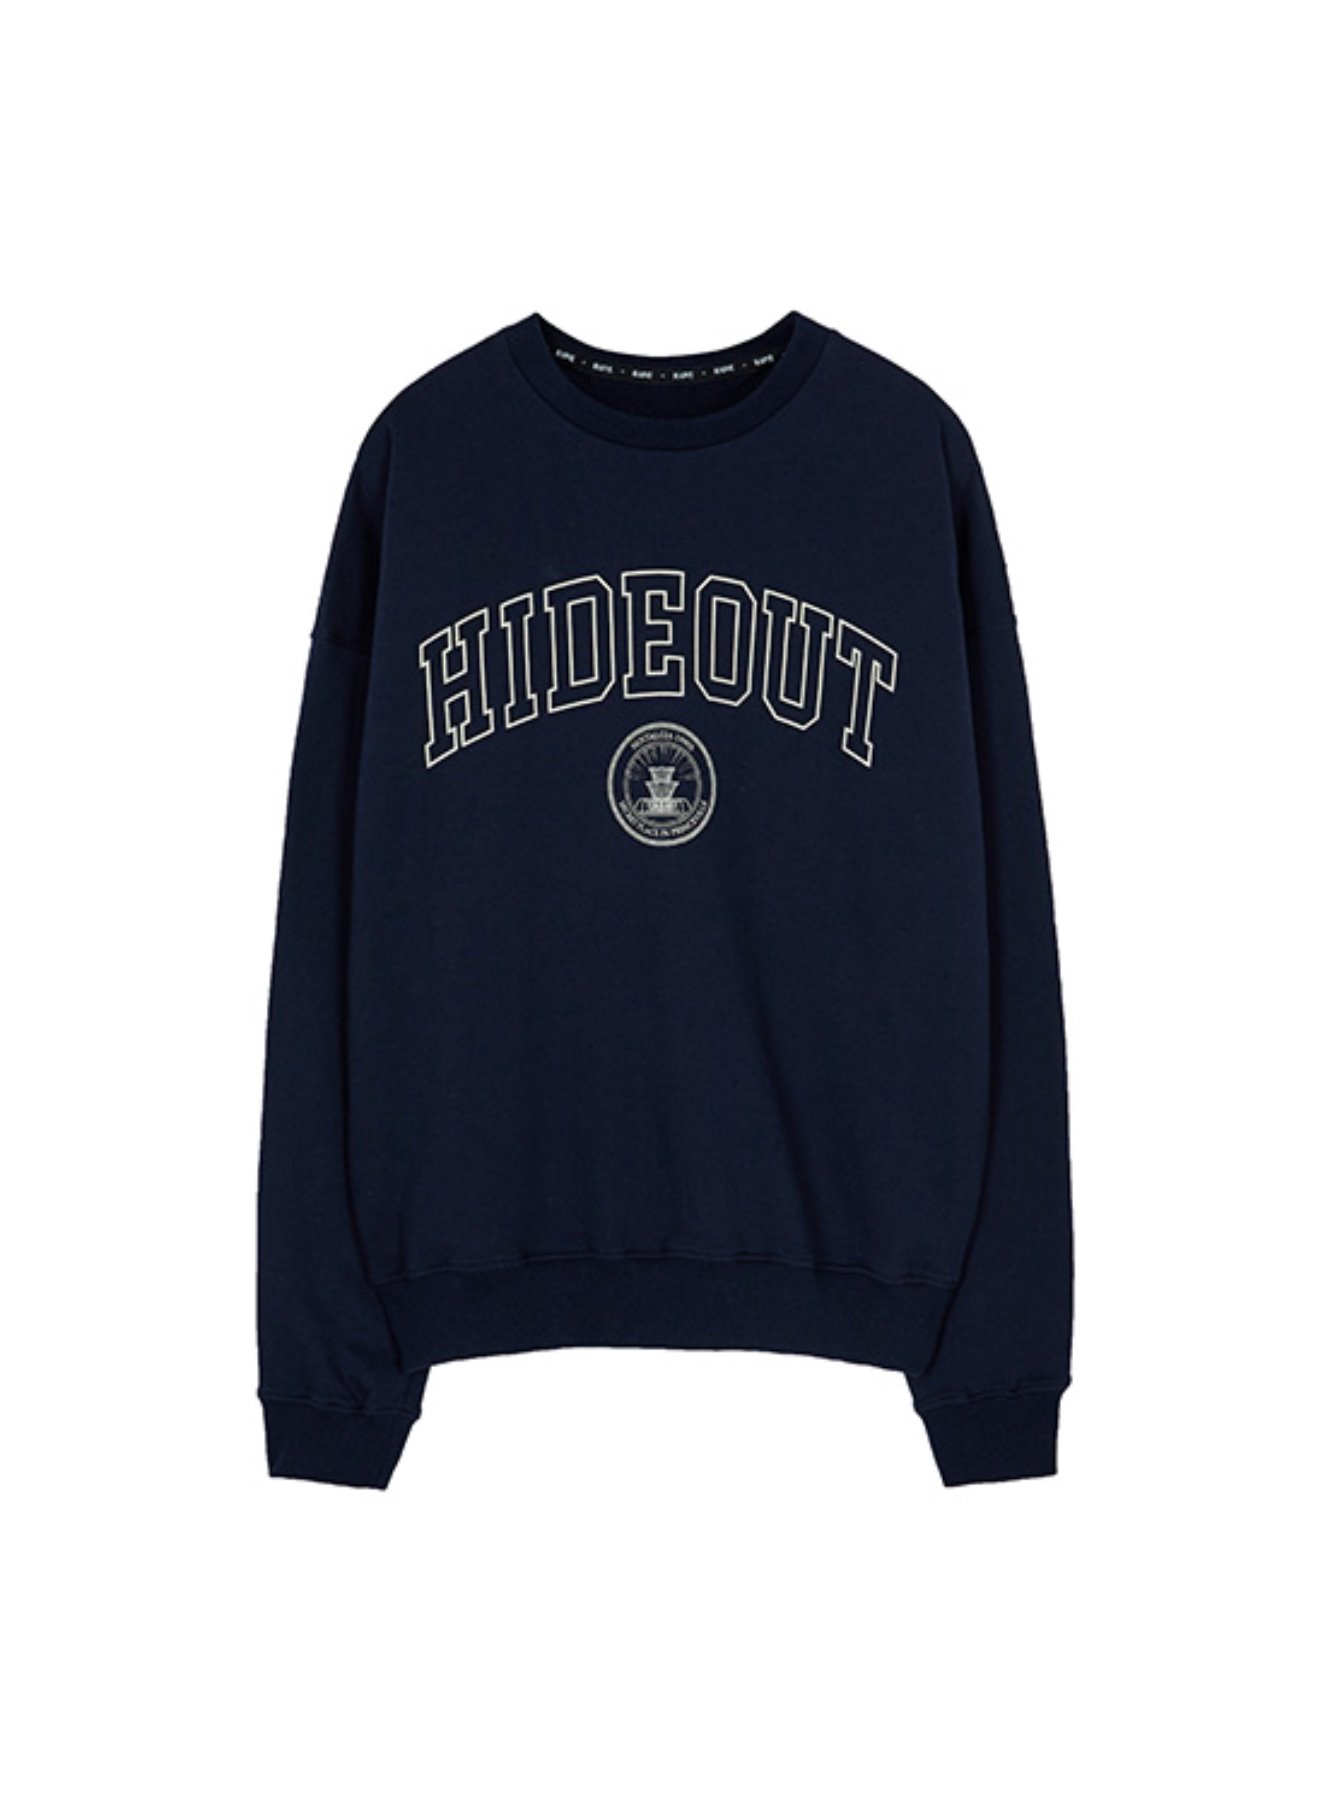 HIDEOUT Print Sweatshirt in Navy VW2SE115-23